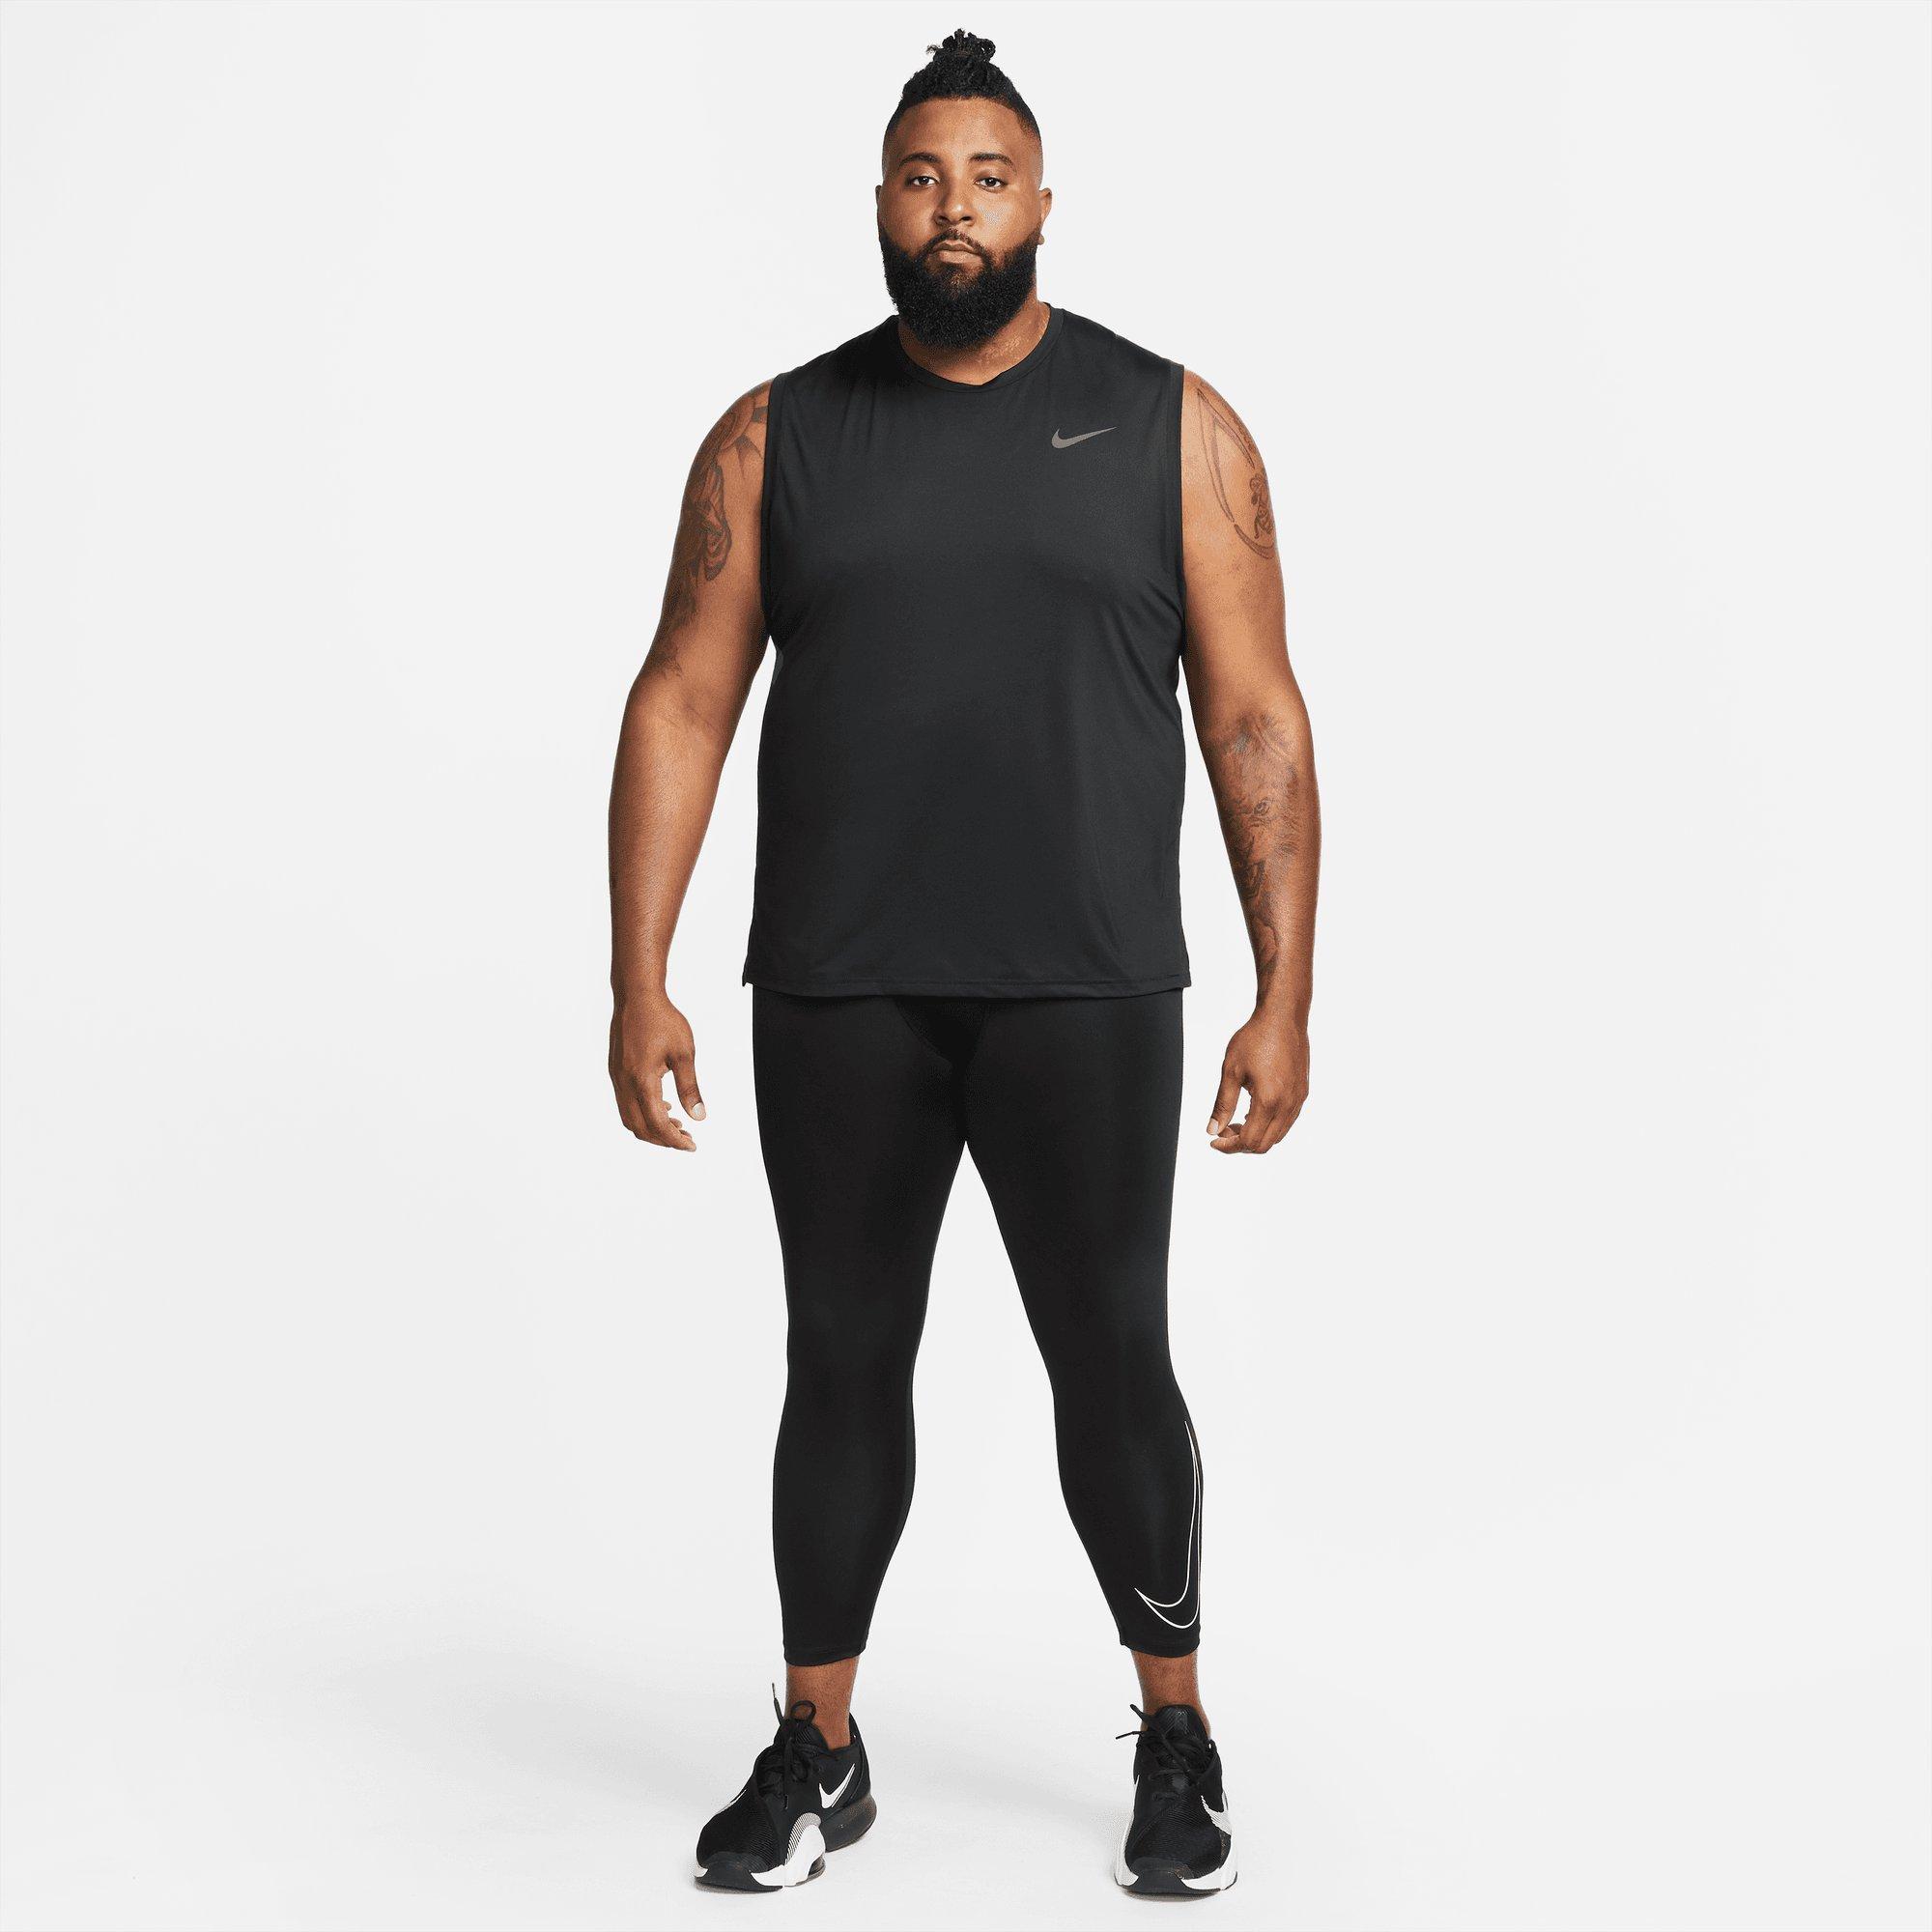 Nike Pro Combat Men's Dri-FIT Tights Pants XL